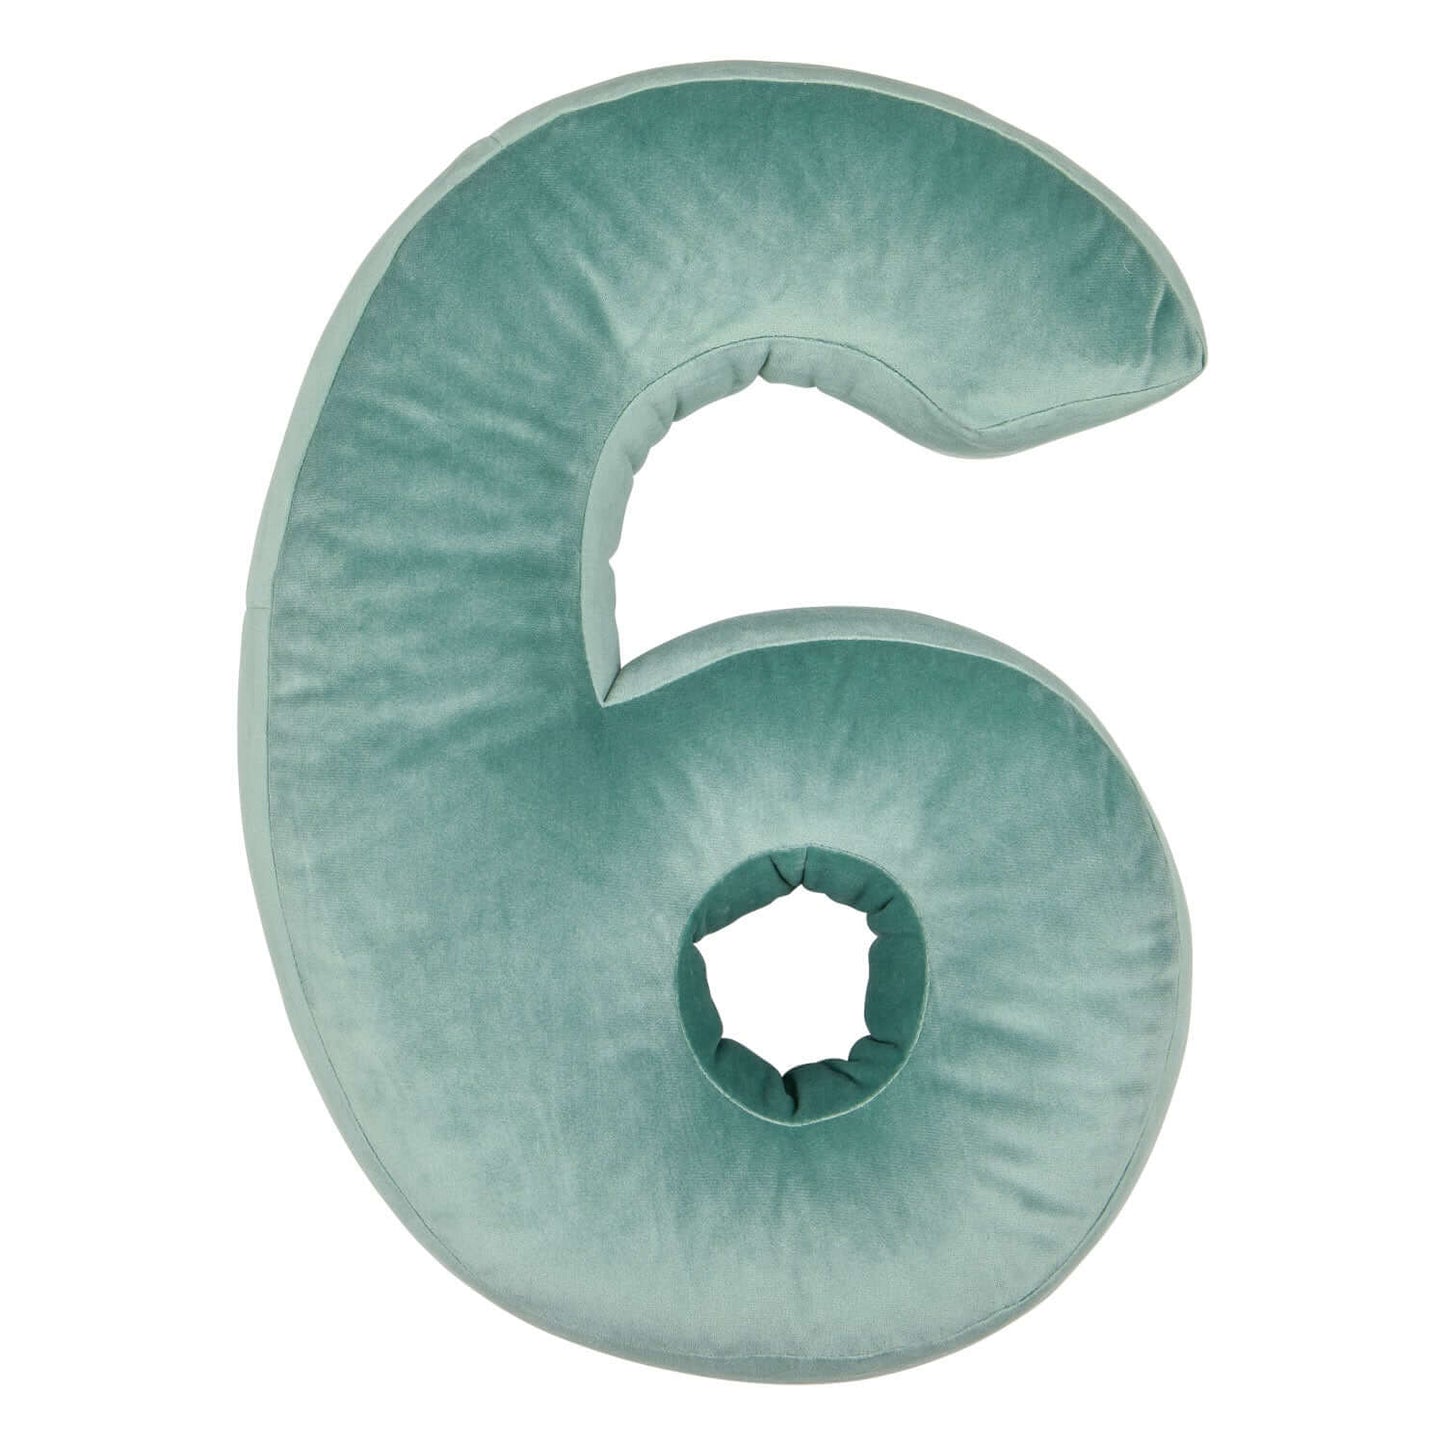 Velvet Cojín con númeross 6 | Number Cushion